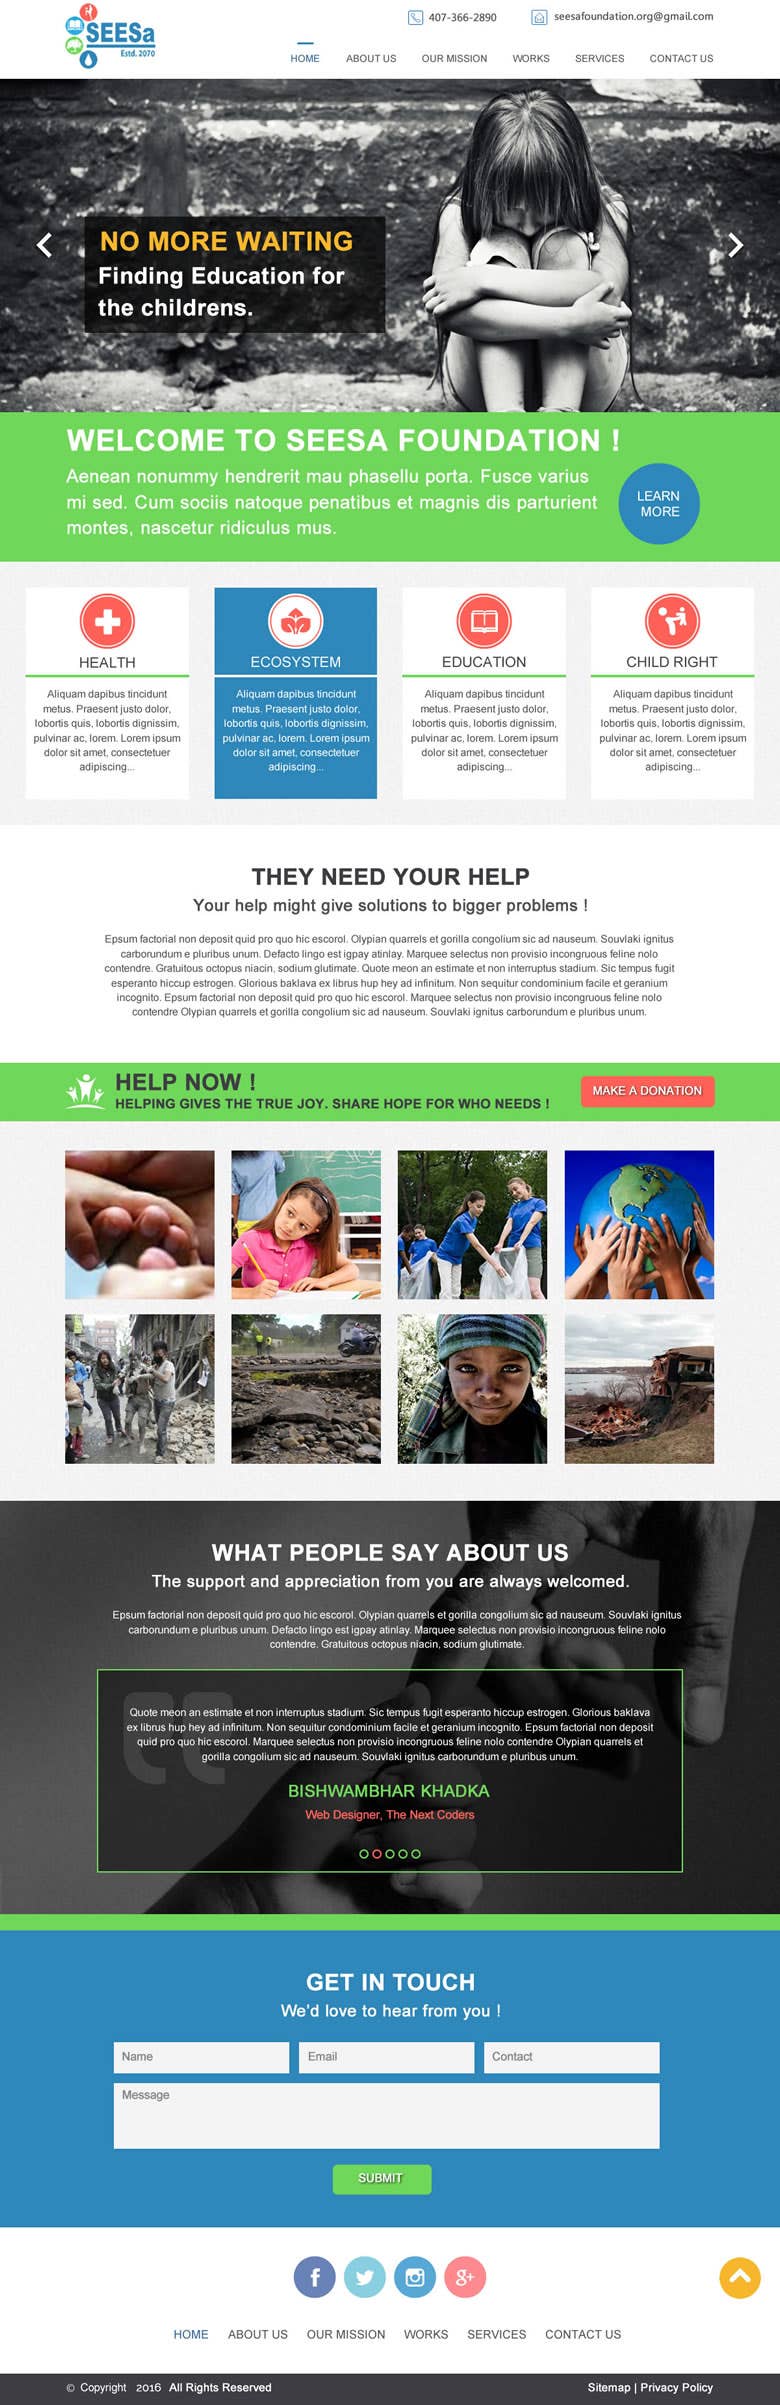 SEESa Foundation NGO Website